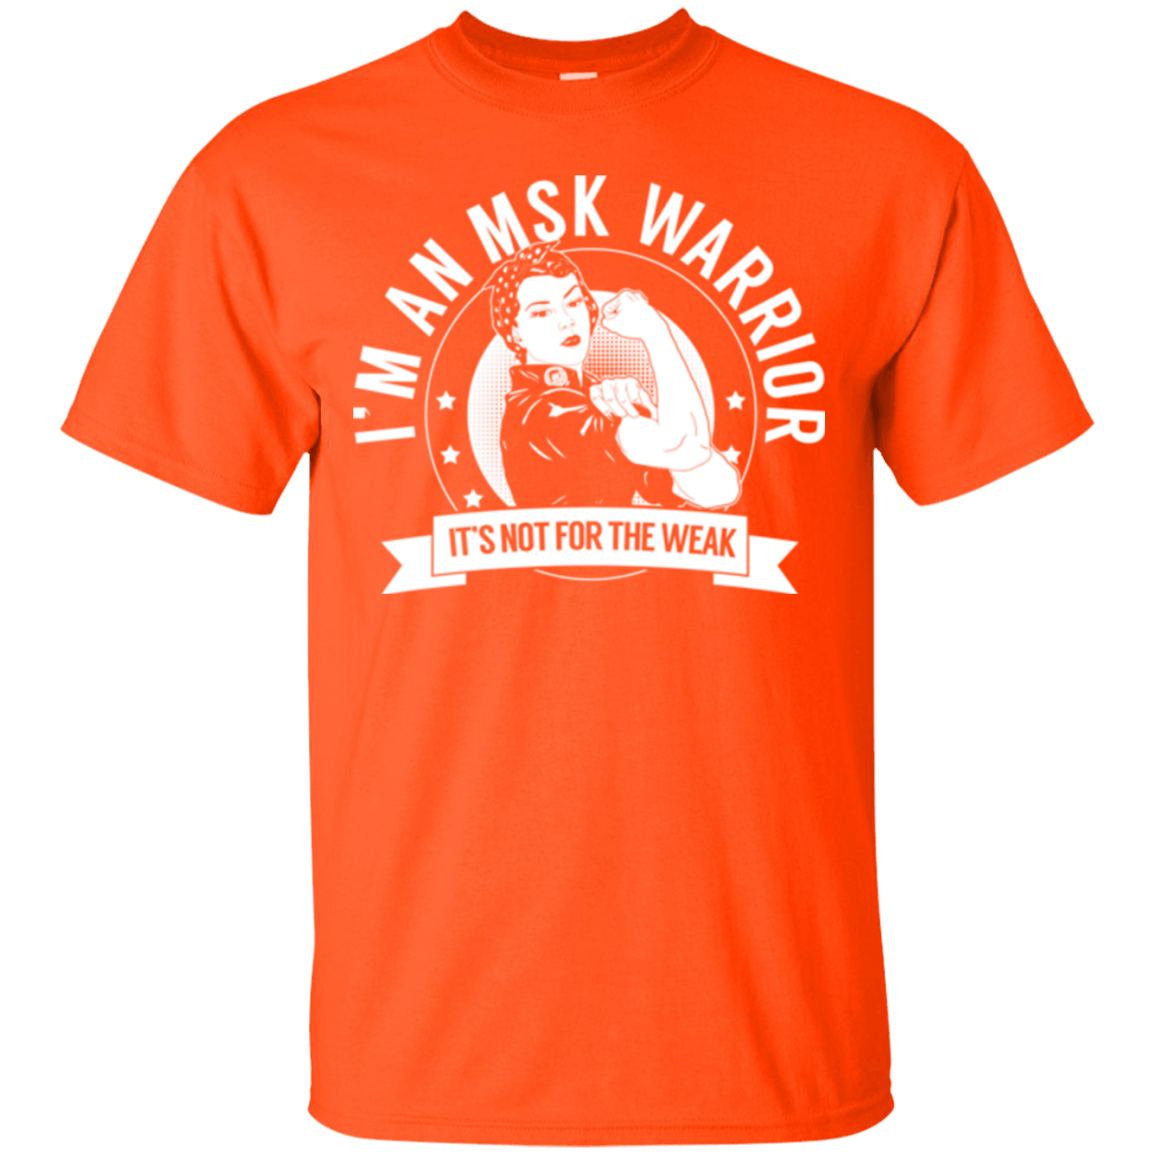 Medullary Sponge Kidney - MSK Warrior Not For The Weak Cotton T-Shirt - The Unchargeables